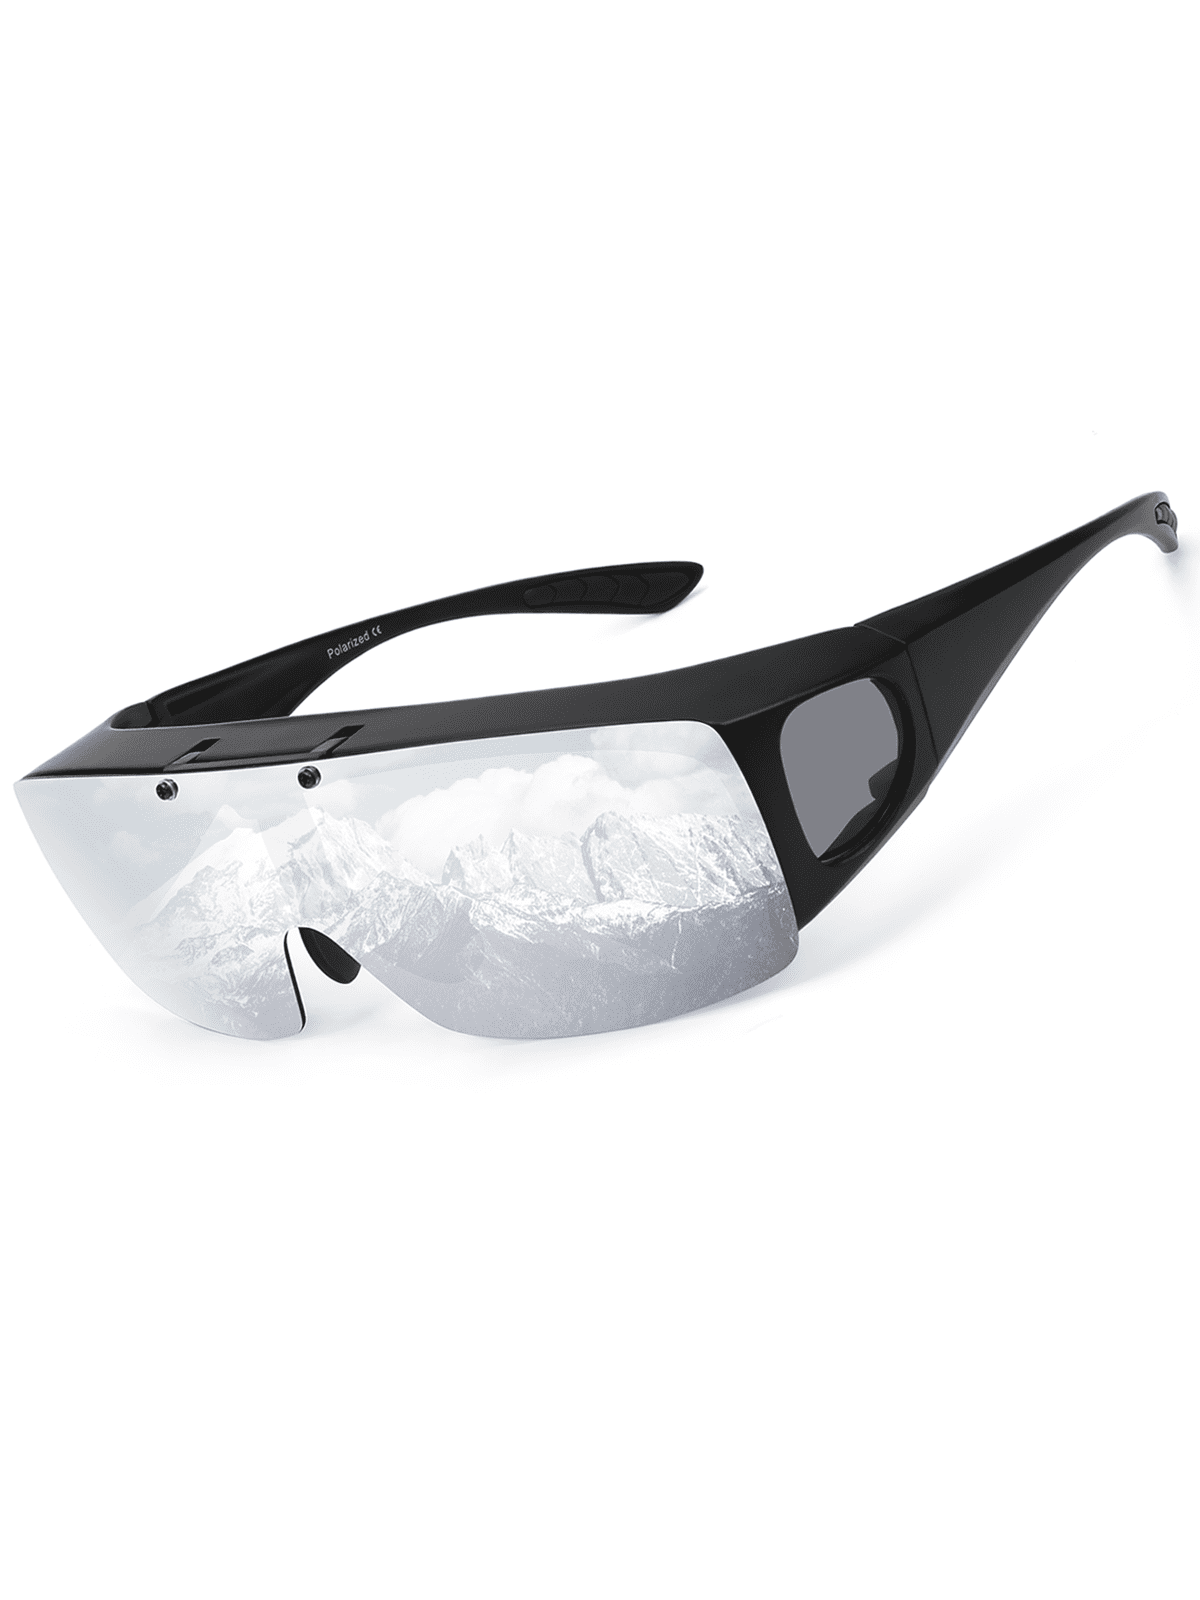 Polarized Polarized Fit Over Glasses Sunglasses Men Women Night Driving  Eyewear Wear Fit Over Prescription Fishing Glasse